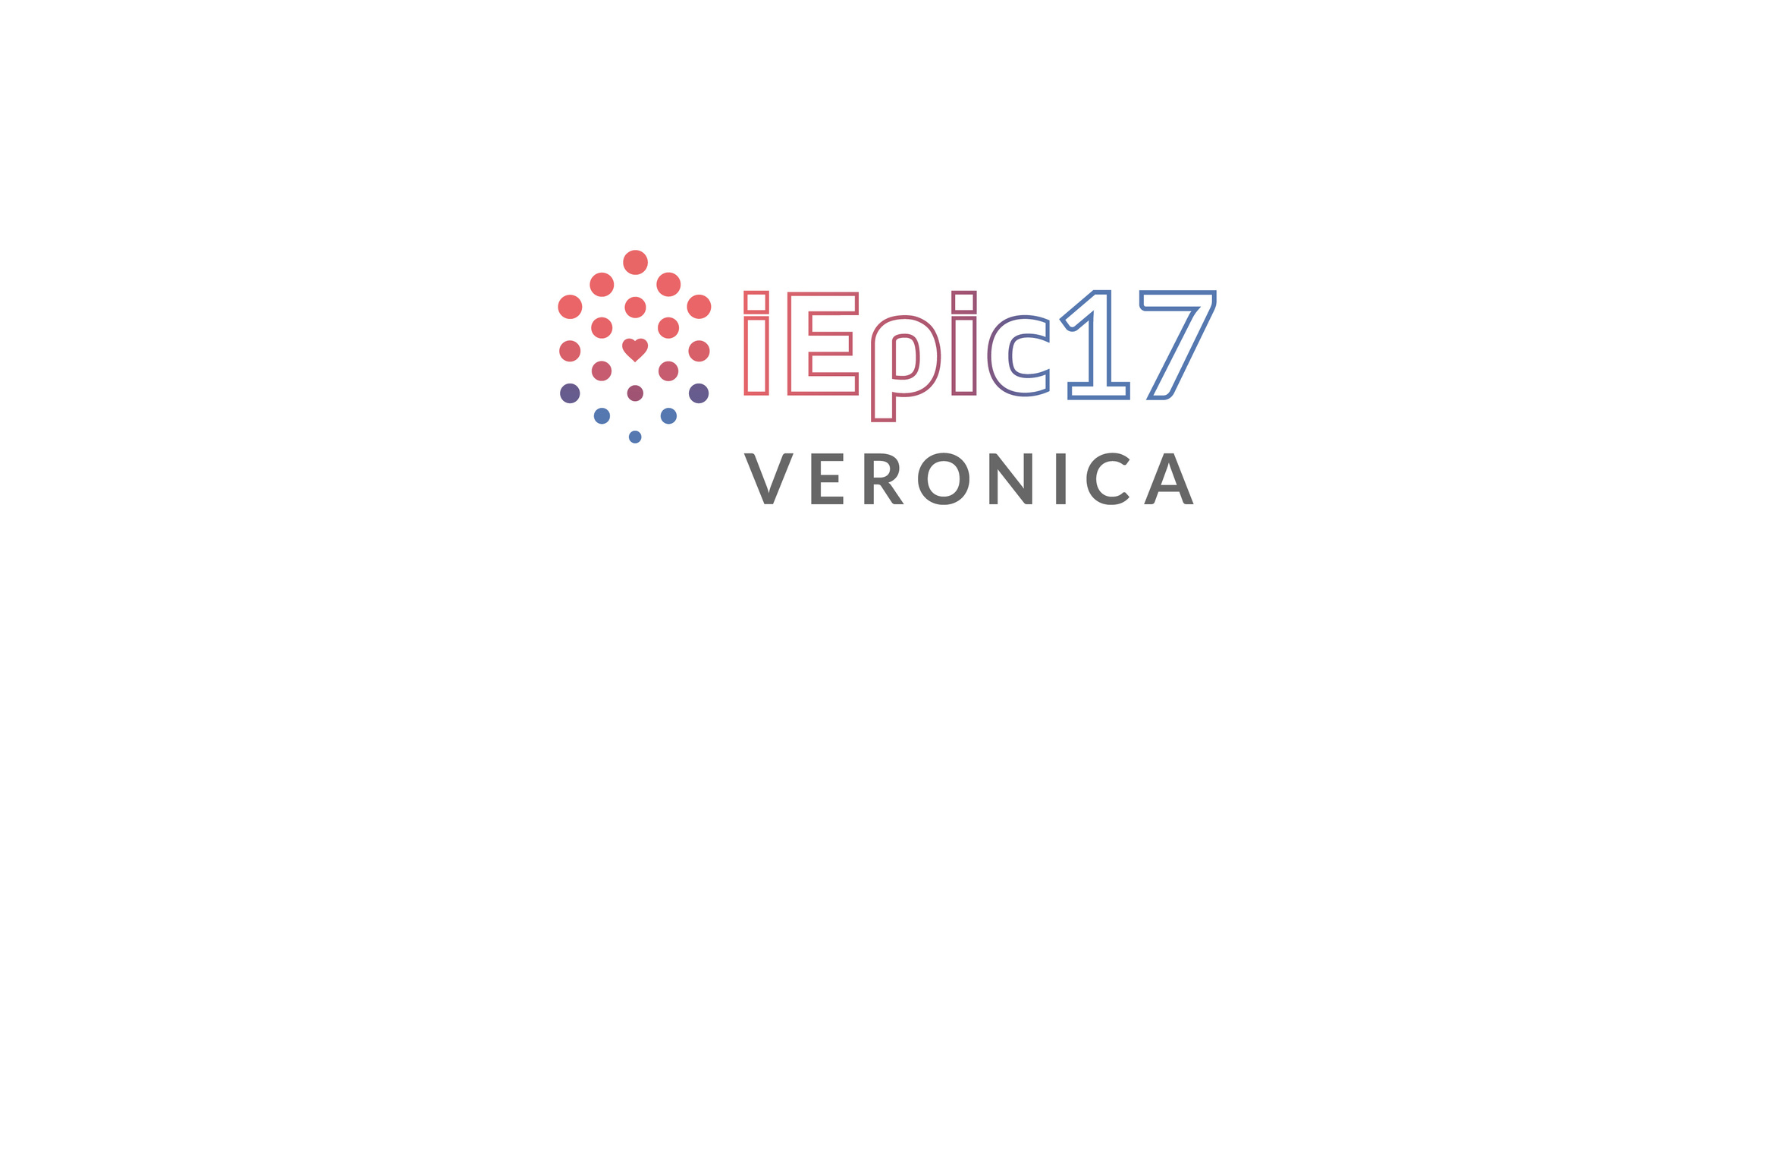 VERÓNICA EPIC17